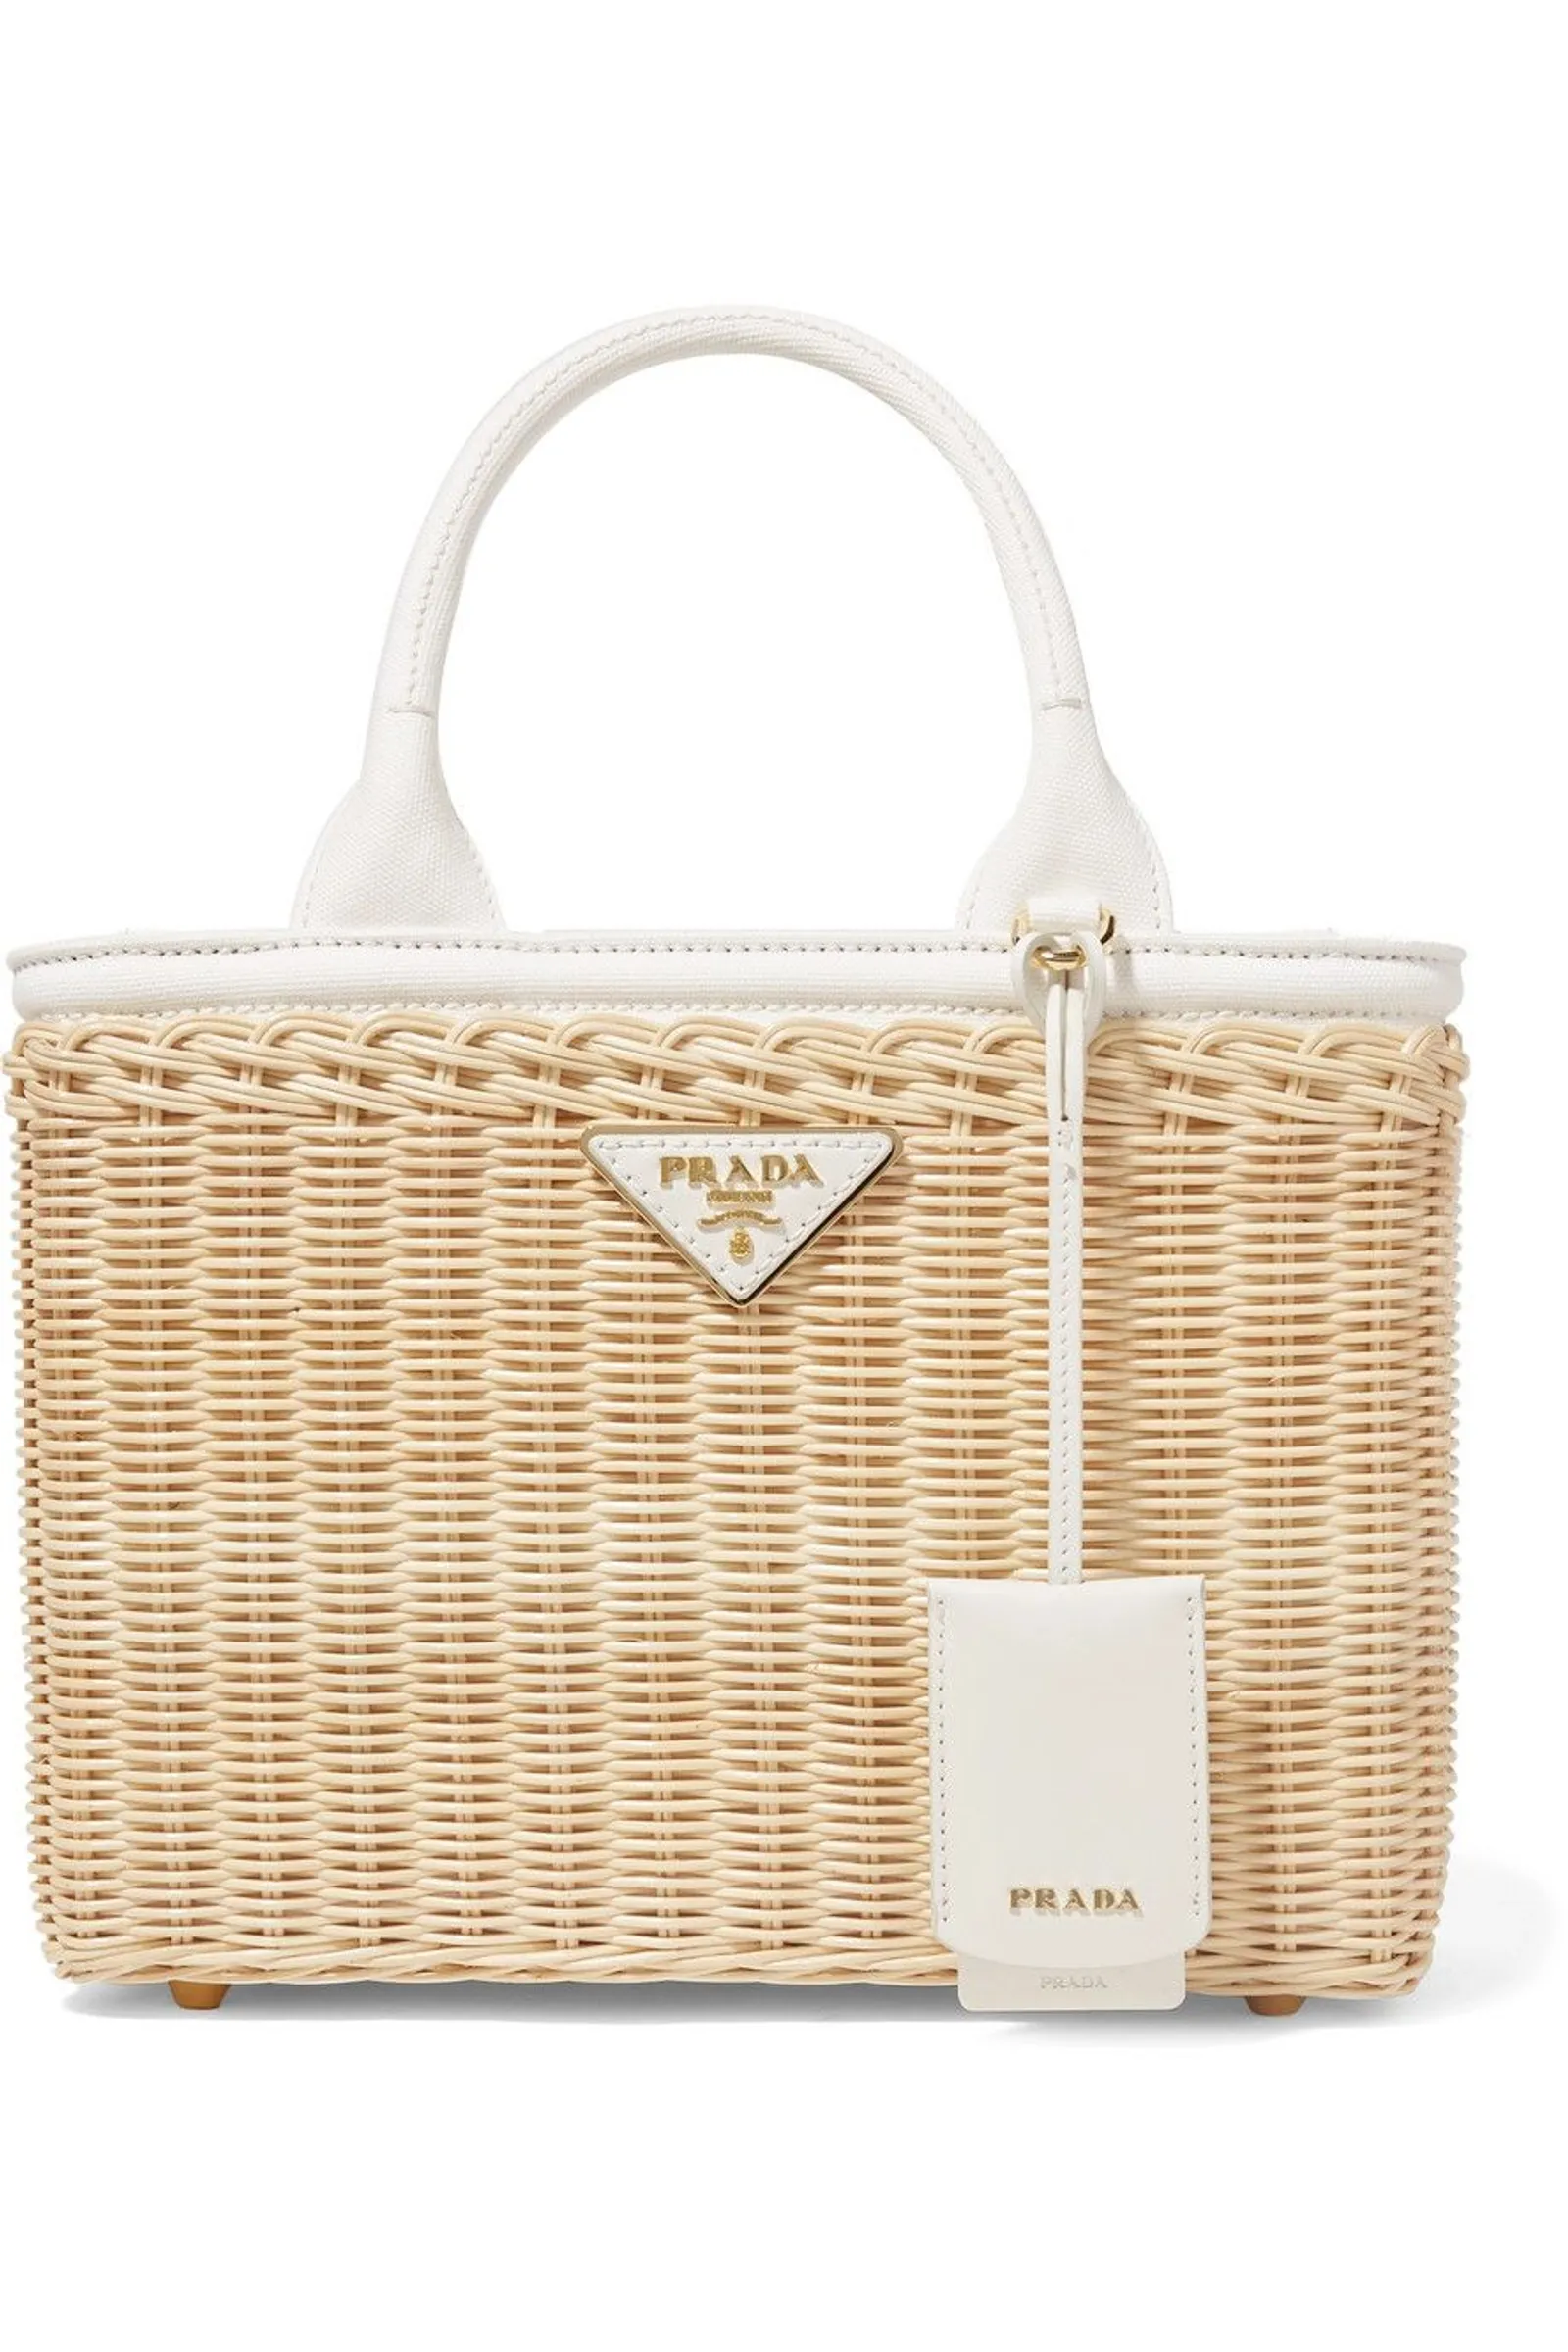 #PopbelaOOTD: Suka Koleksi Tas Lucu? Harus Lihat yang Satu Ini